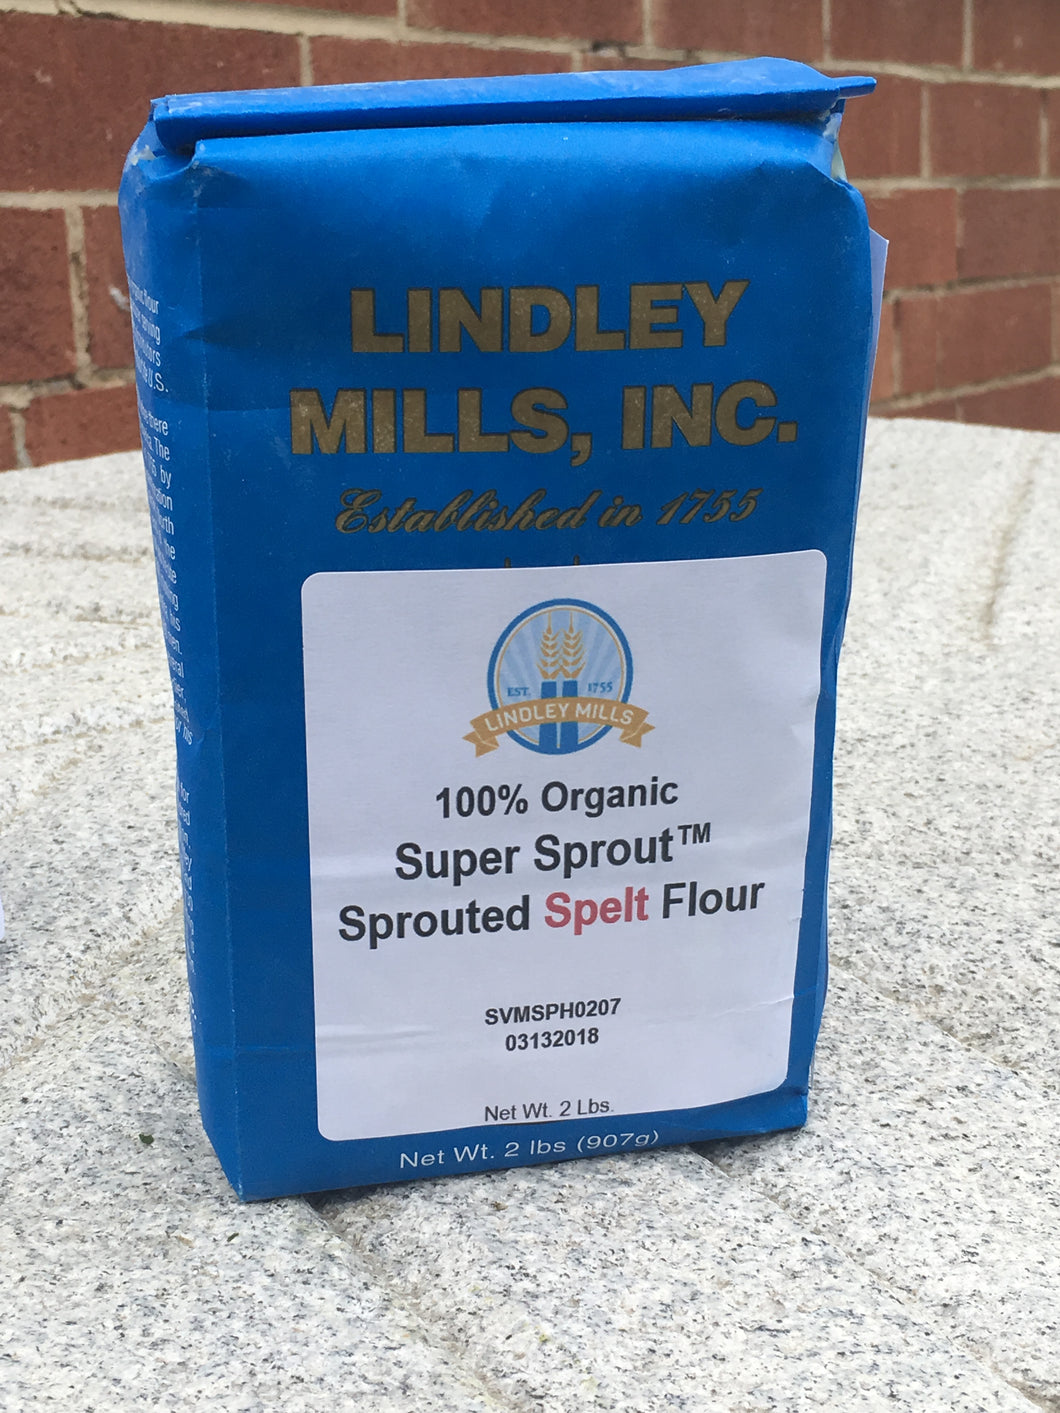 Revolutionary Organic Super Sprout™ Spelt Flour